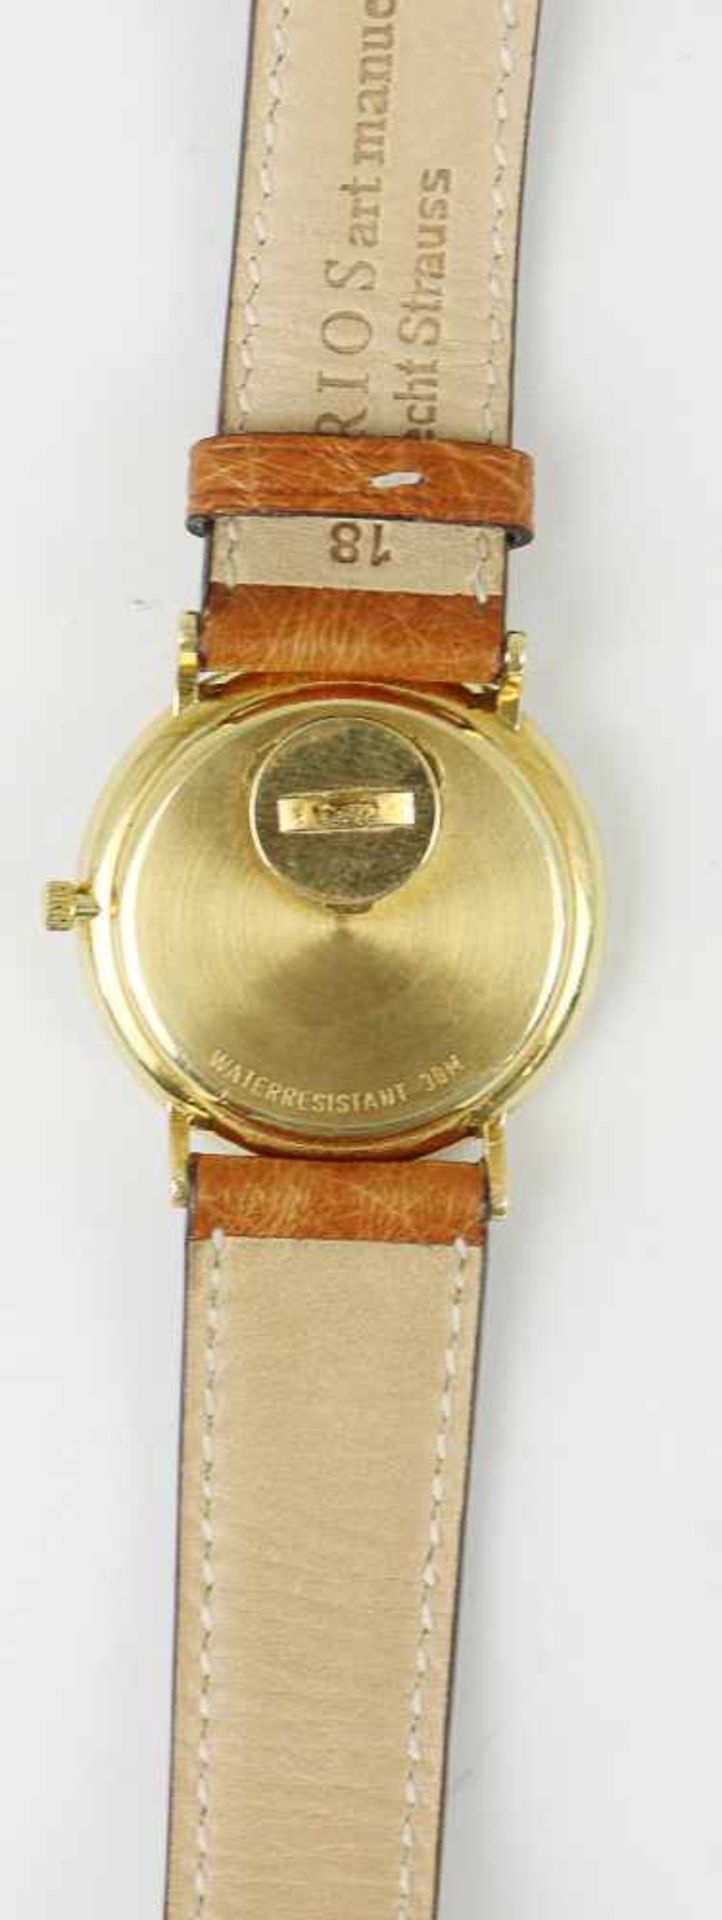 Herrenarmbanduhr - TissotSchweiz, GG 750, rundes Gehäuse, Dca.3,2cm, goldfarbenes Zifferblatt, - Image 4 of 5